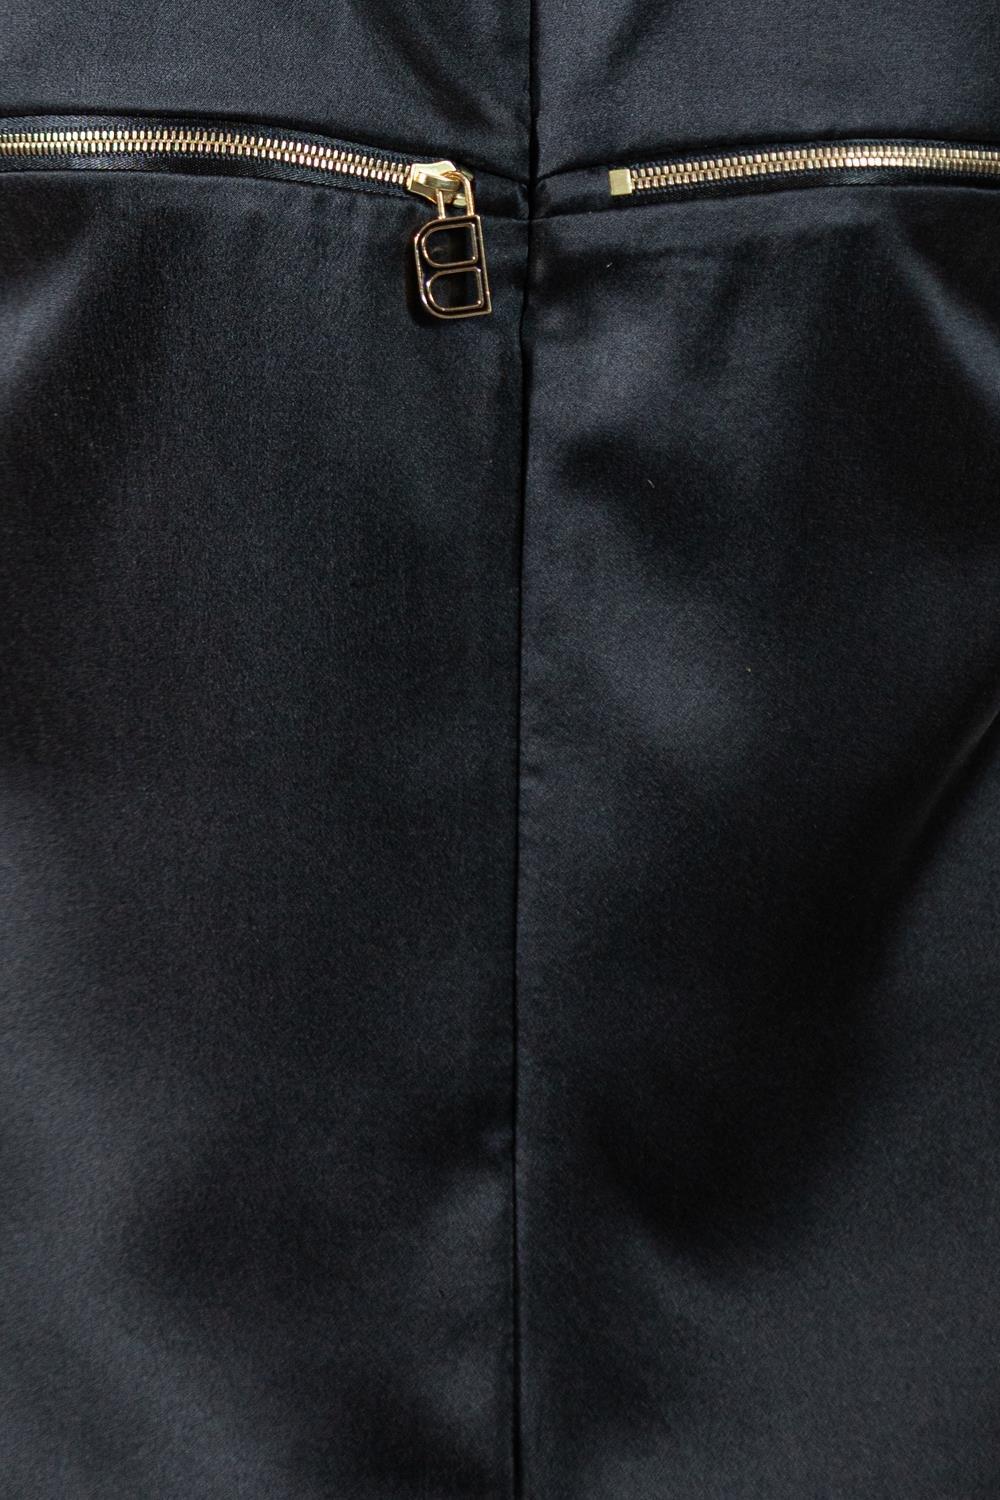 2000S BRANDON MAXWELL Black Silk Cocktail Dress With Gold Zipper Detail 6